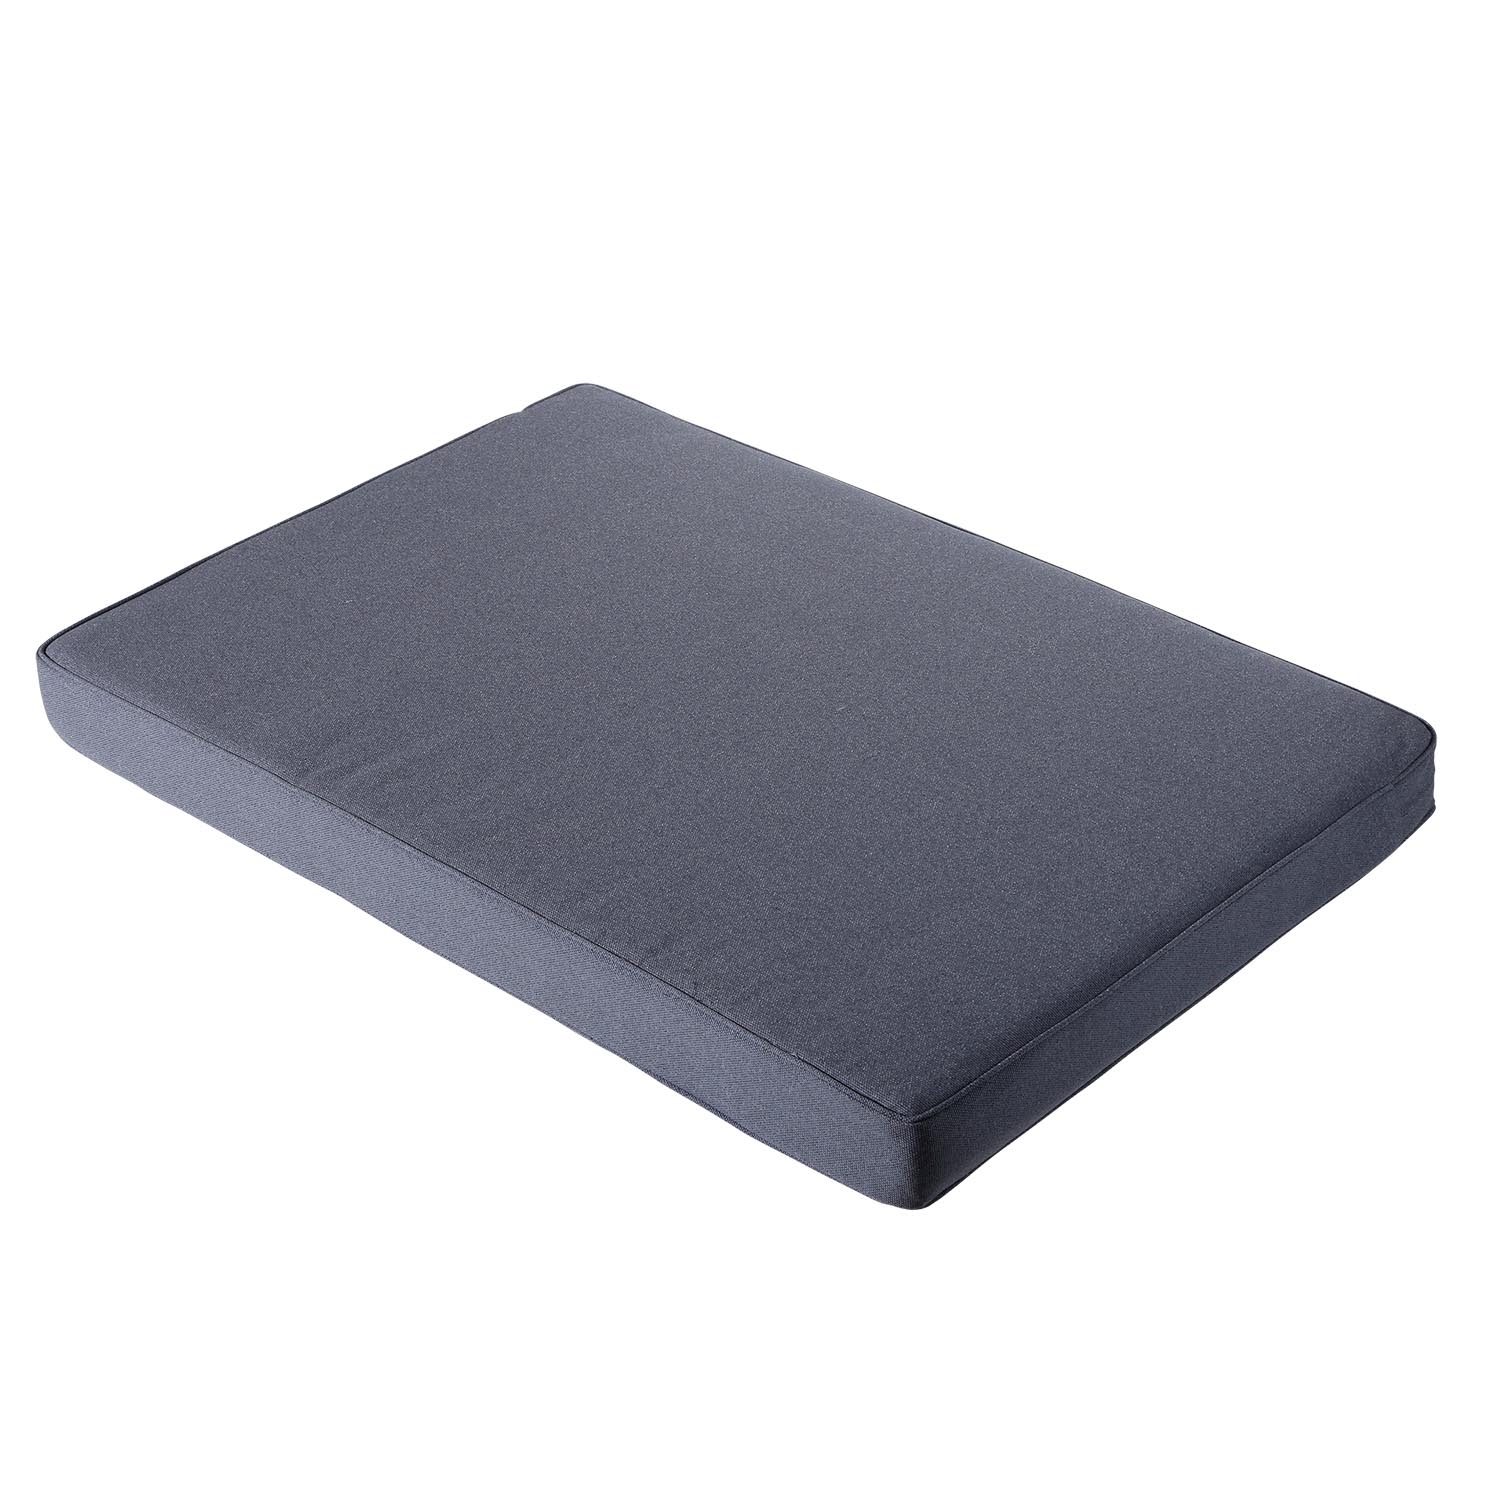 Loungekussen Pallet premium 120x80cm carré - outdoor Manchester denim grey